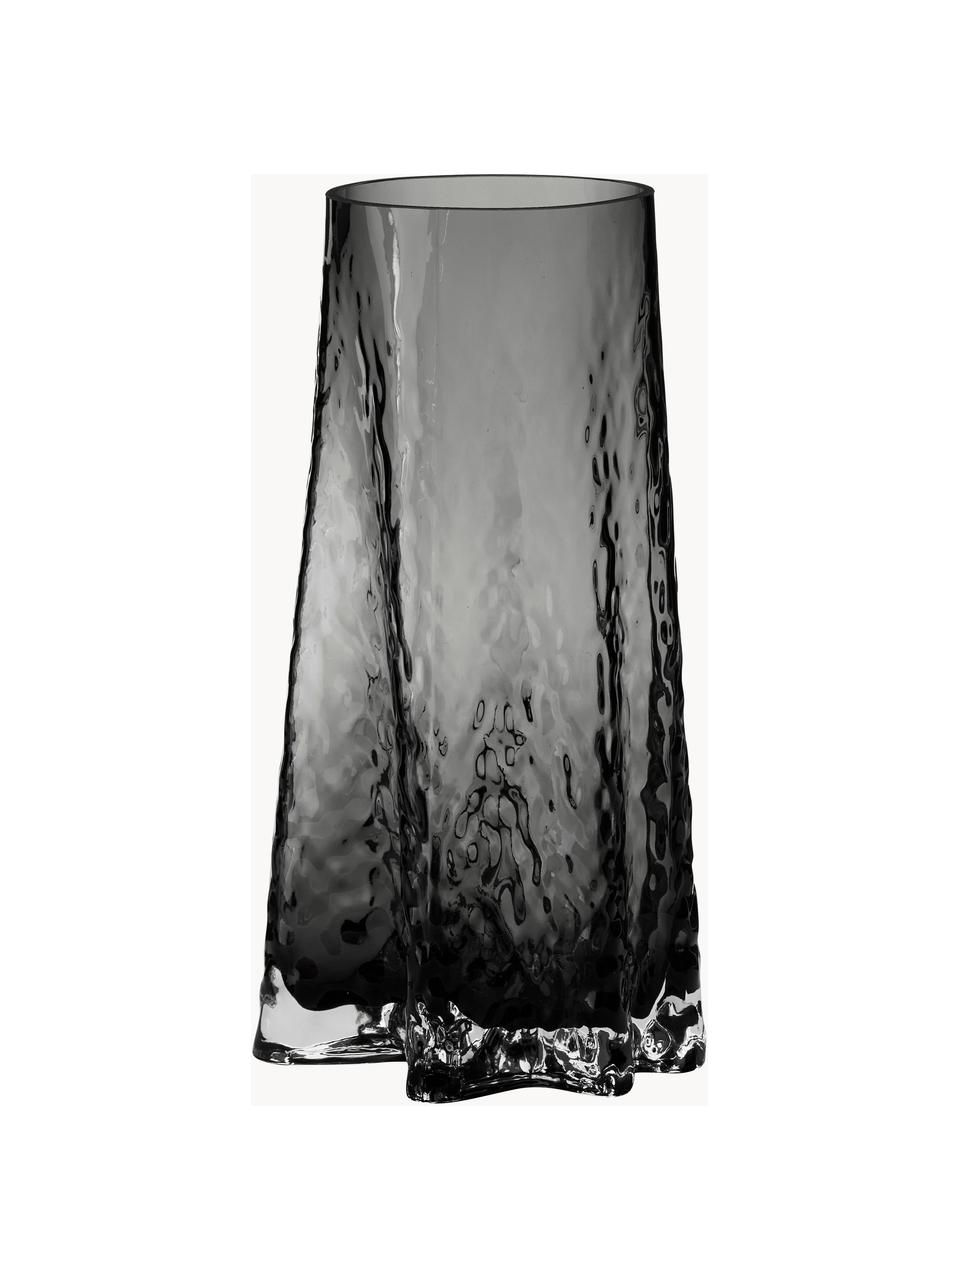 Mundgeblasene Glas-Vase Gry mit strukturierter Oberfläche, H 30 cm, Glas, mundgeblasen, Anthrazit, Ø 15 x H 30 cm